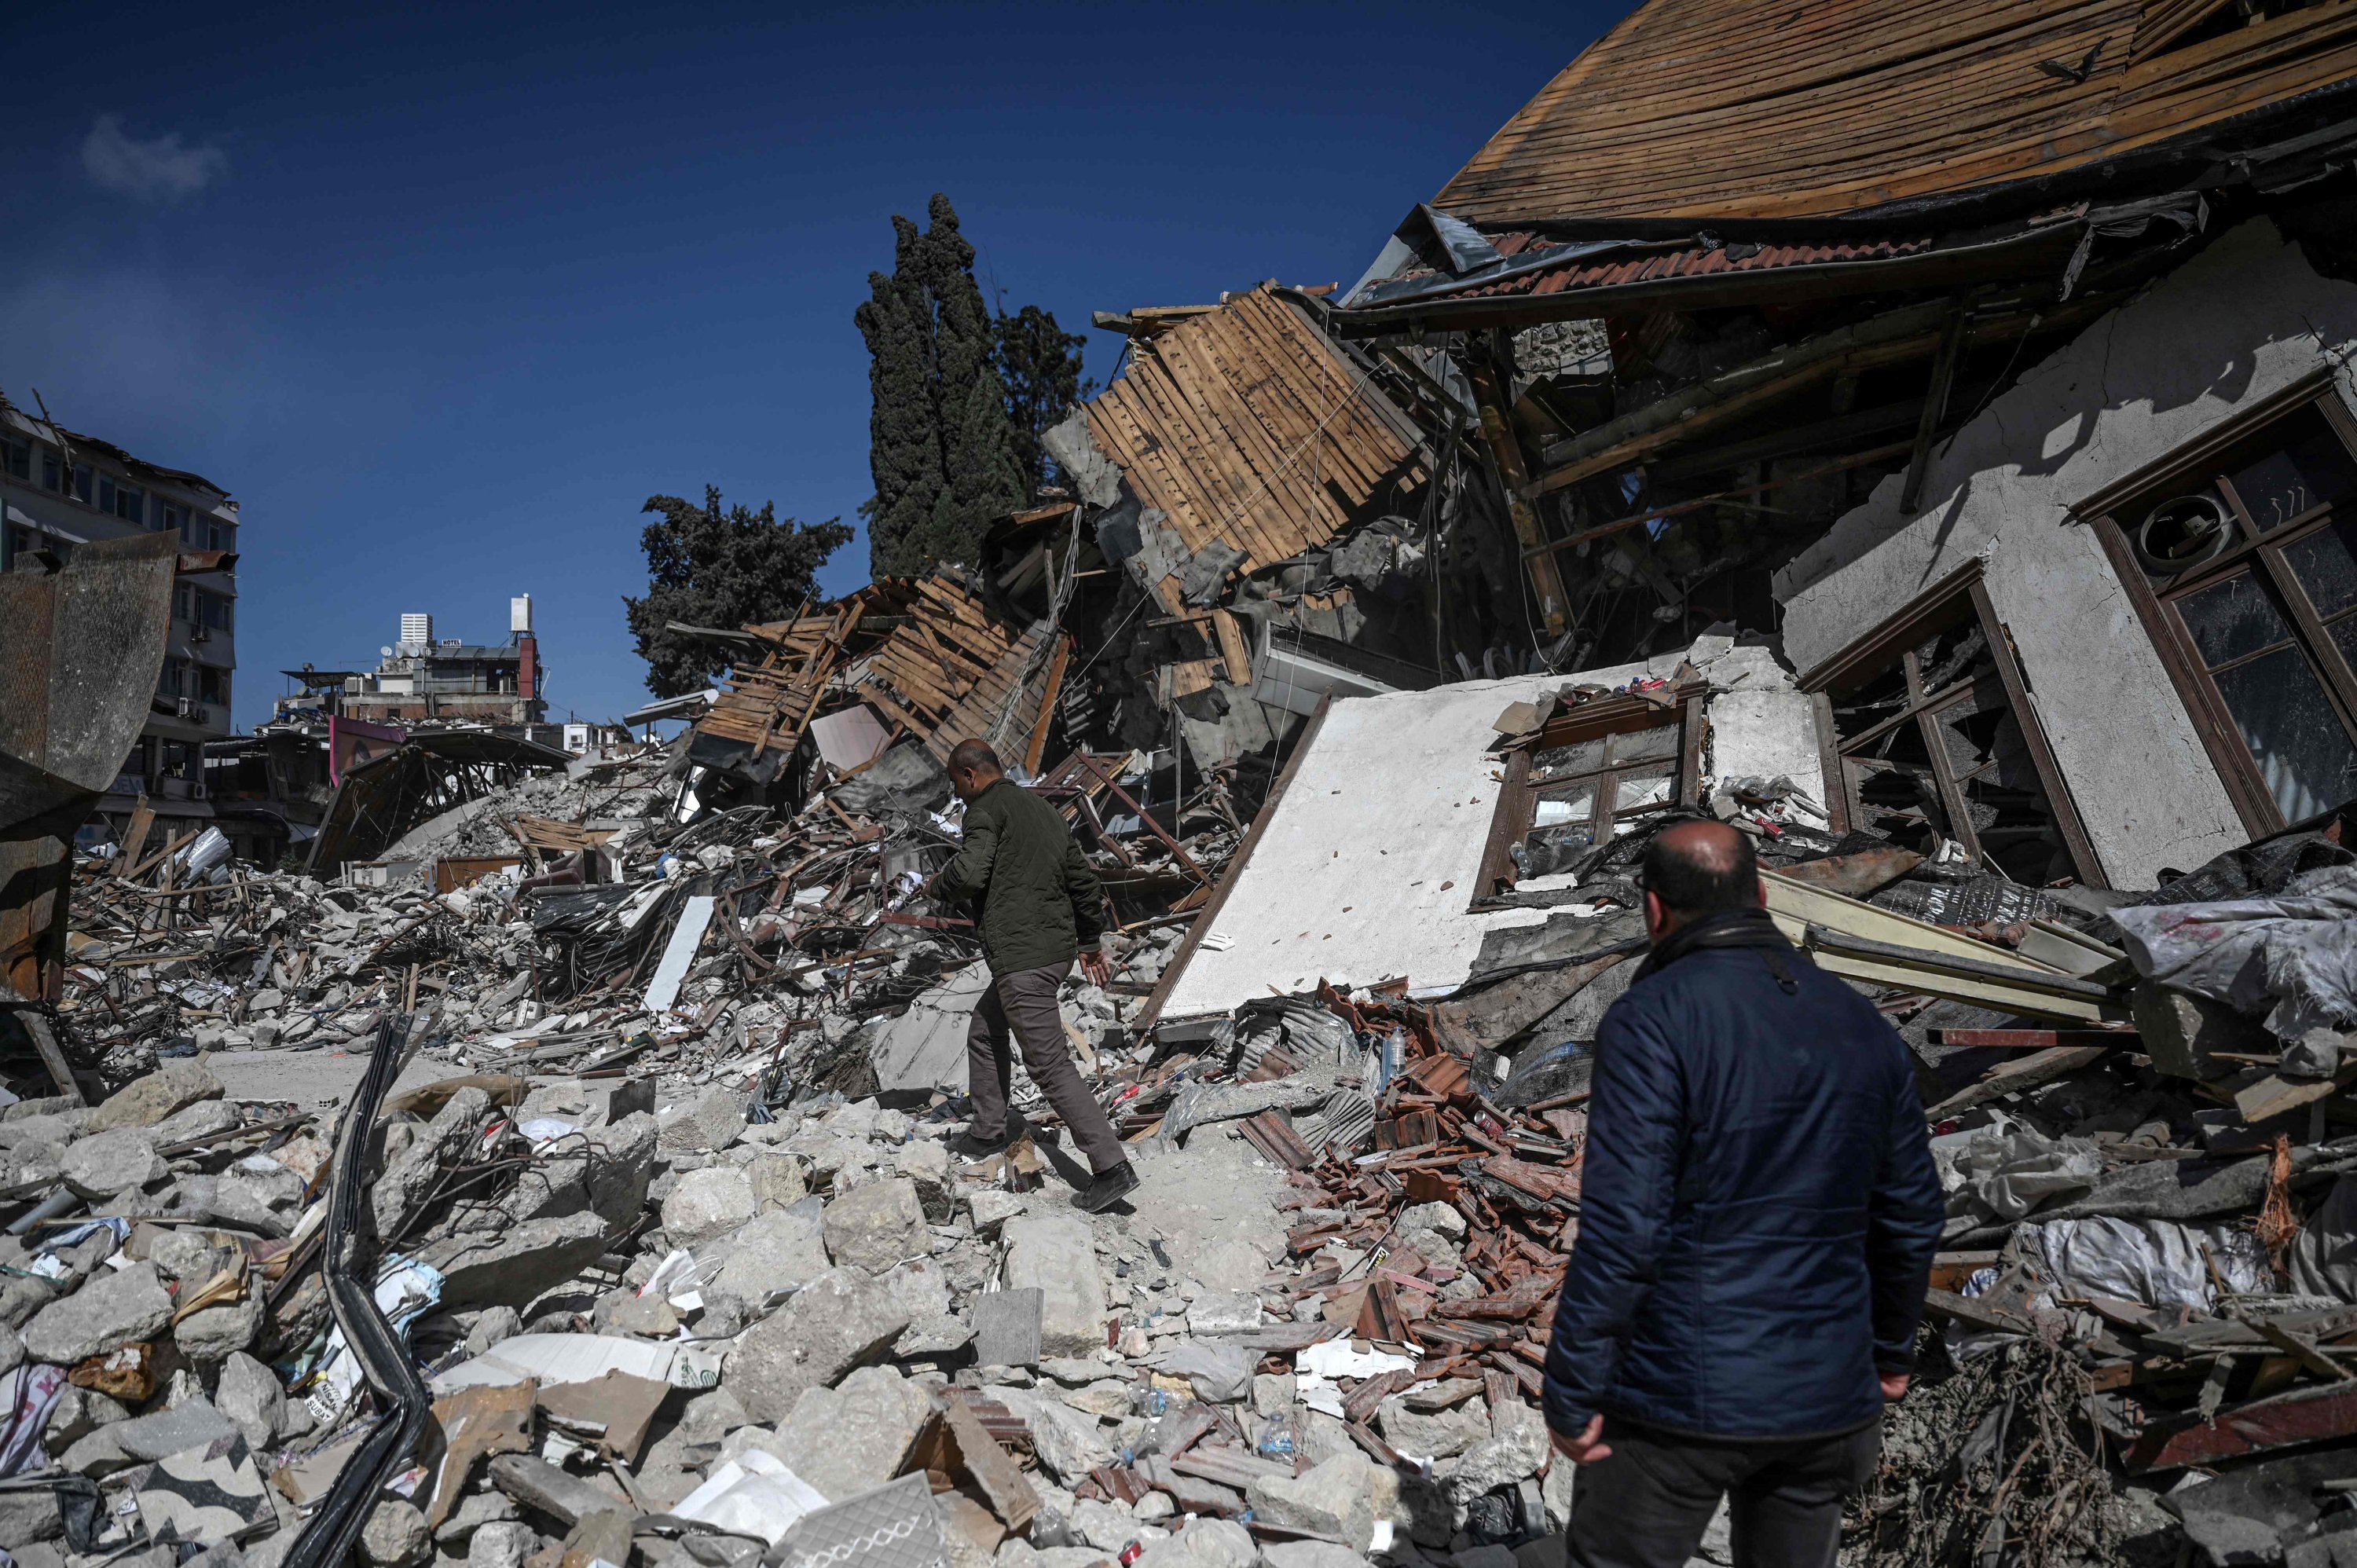 Türkiye wipes off energy debts of quake victims with damaged houses ...